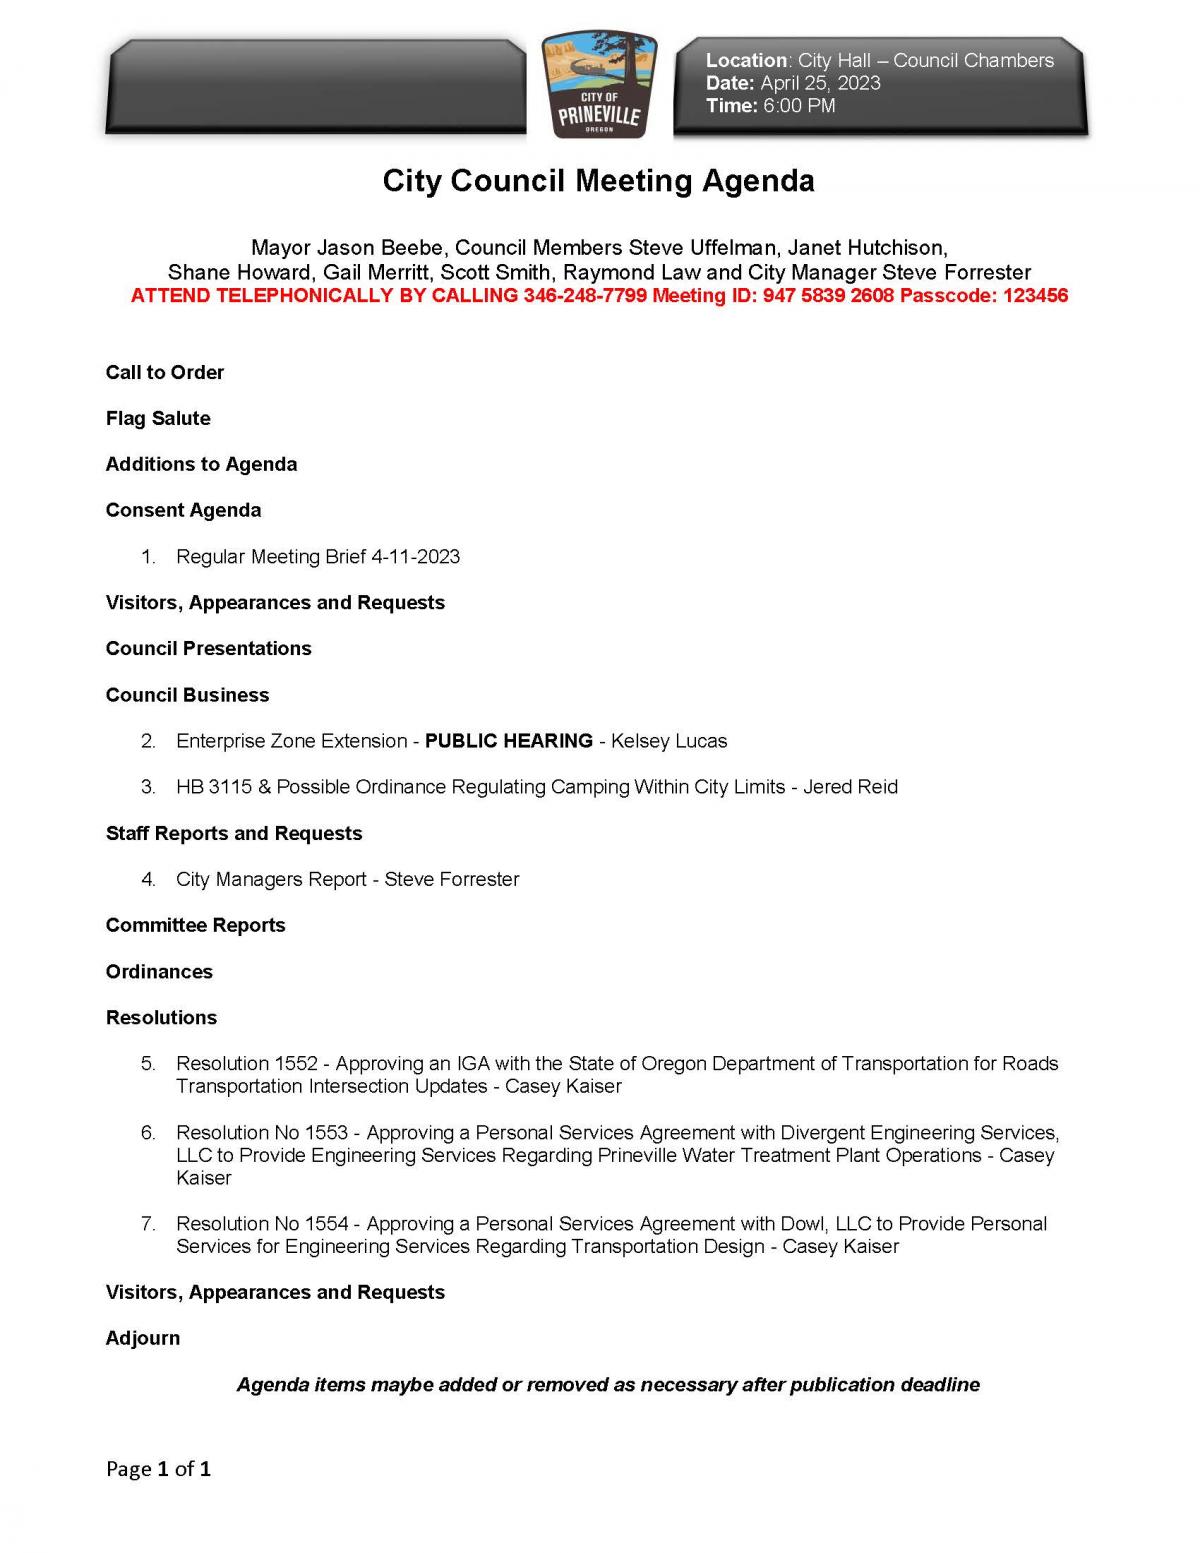 Council Agenda 4-25-2023